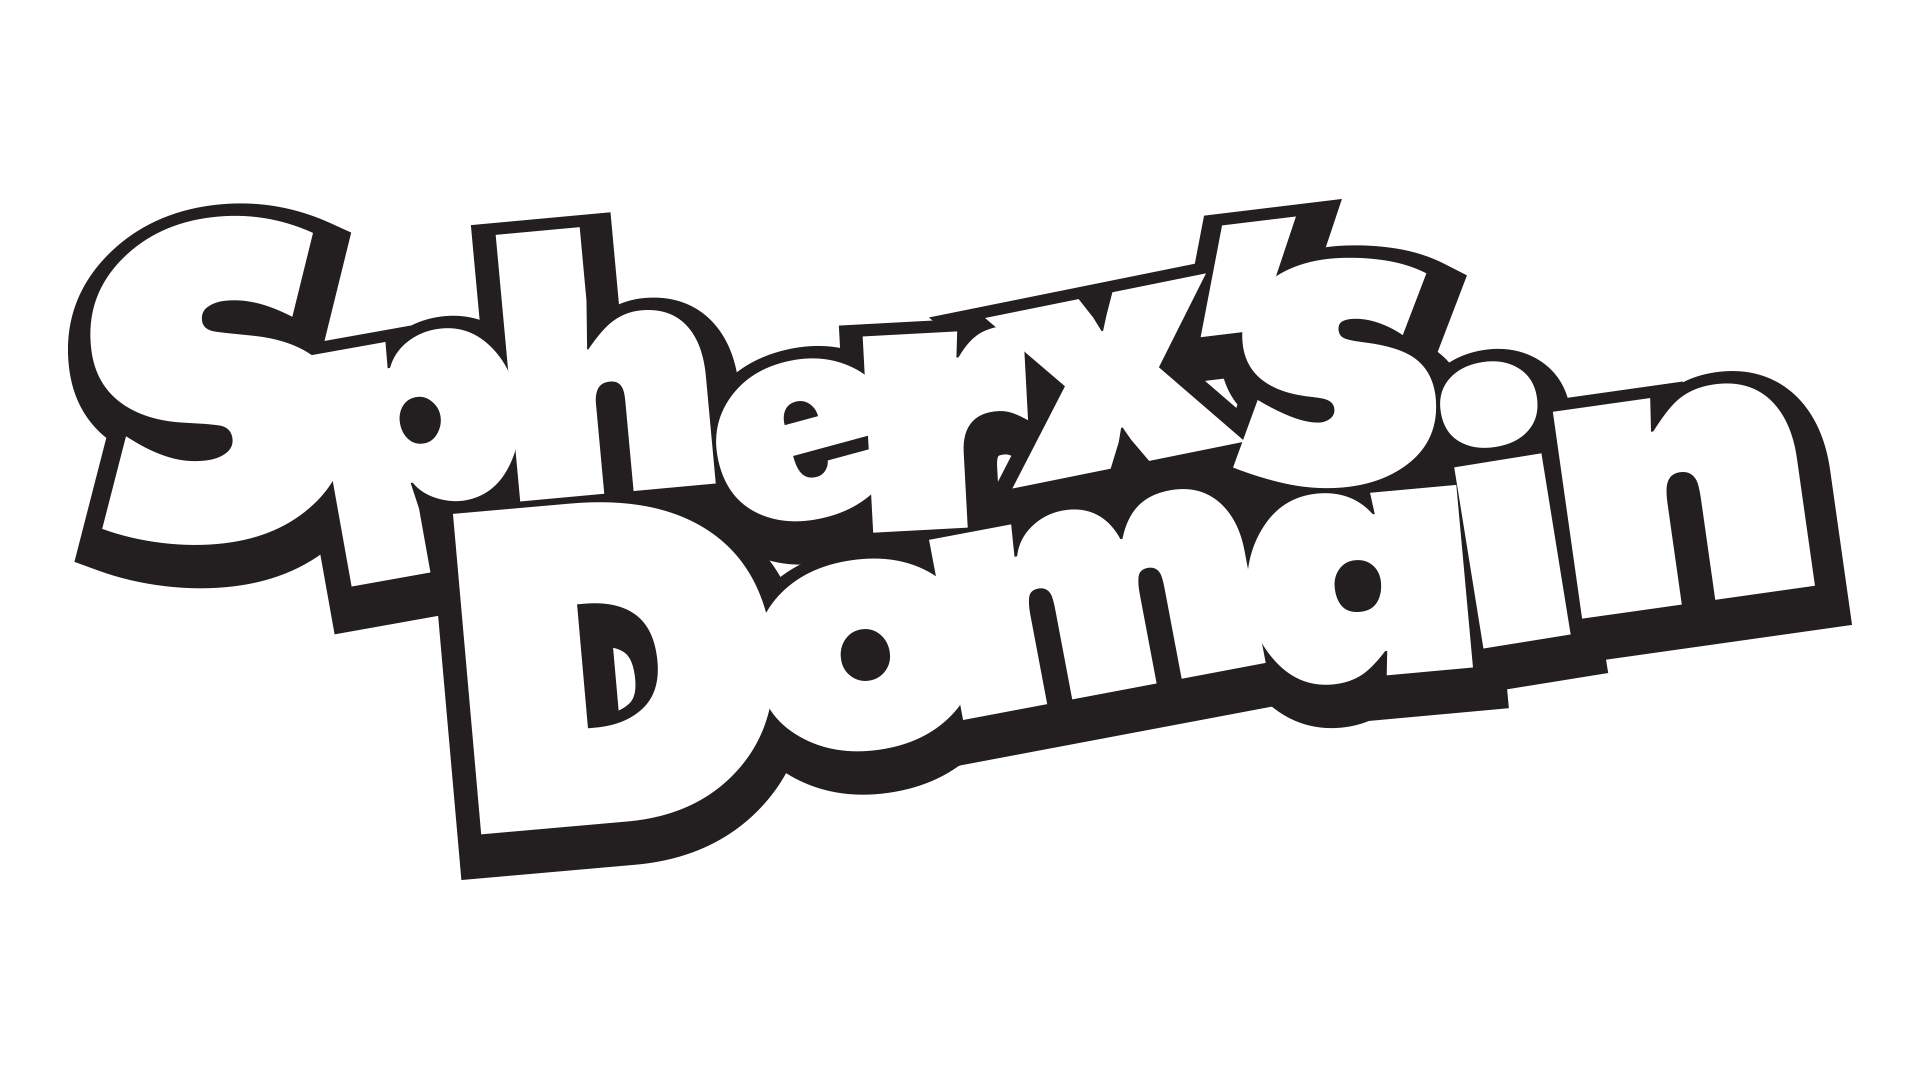 Spherx's Domain